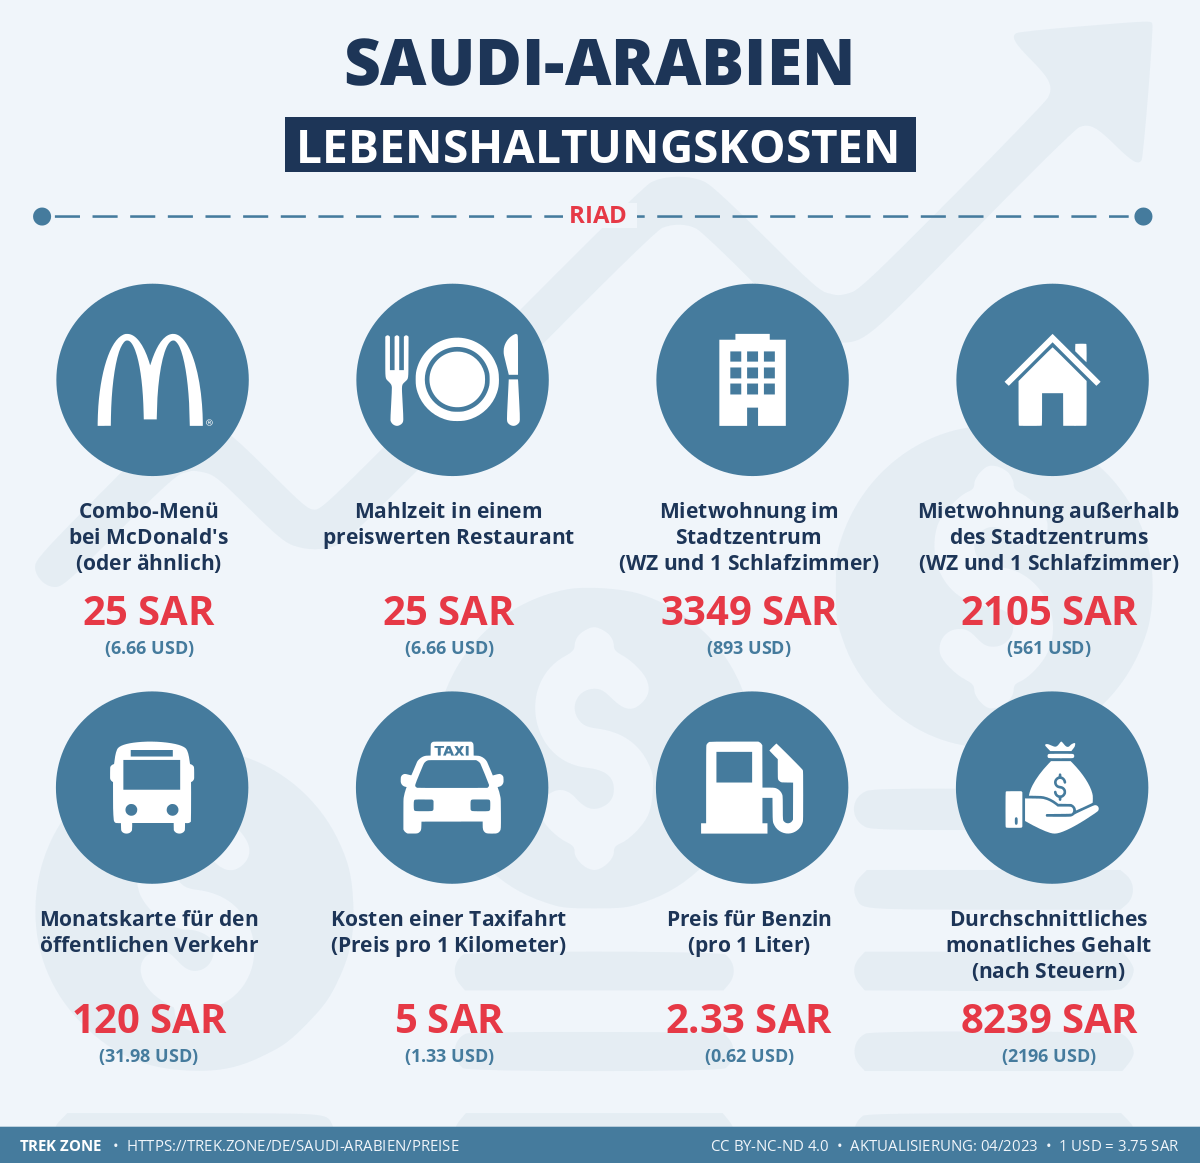 preise und lebenskosten saudi arabien